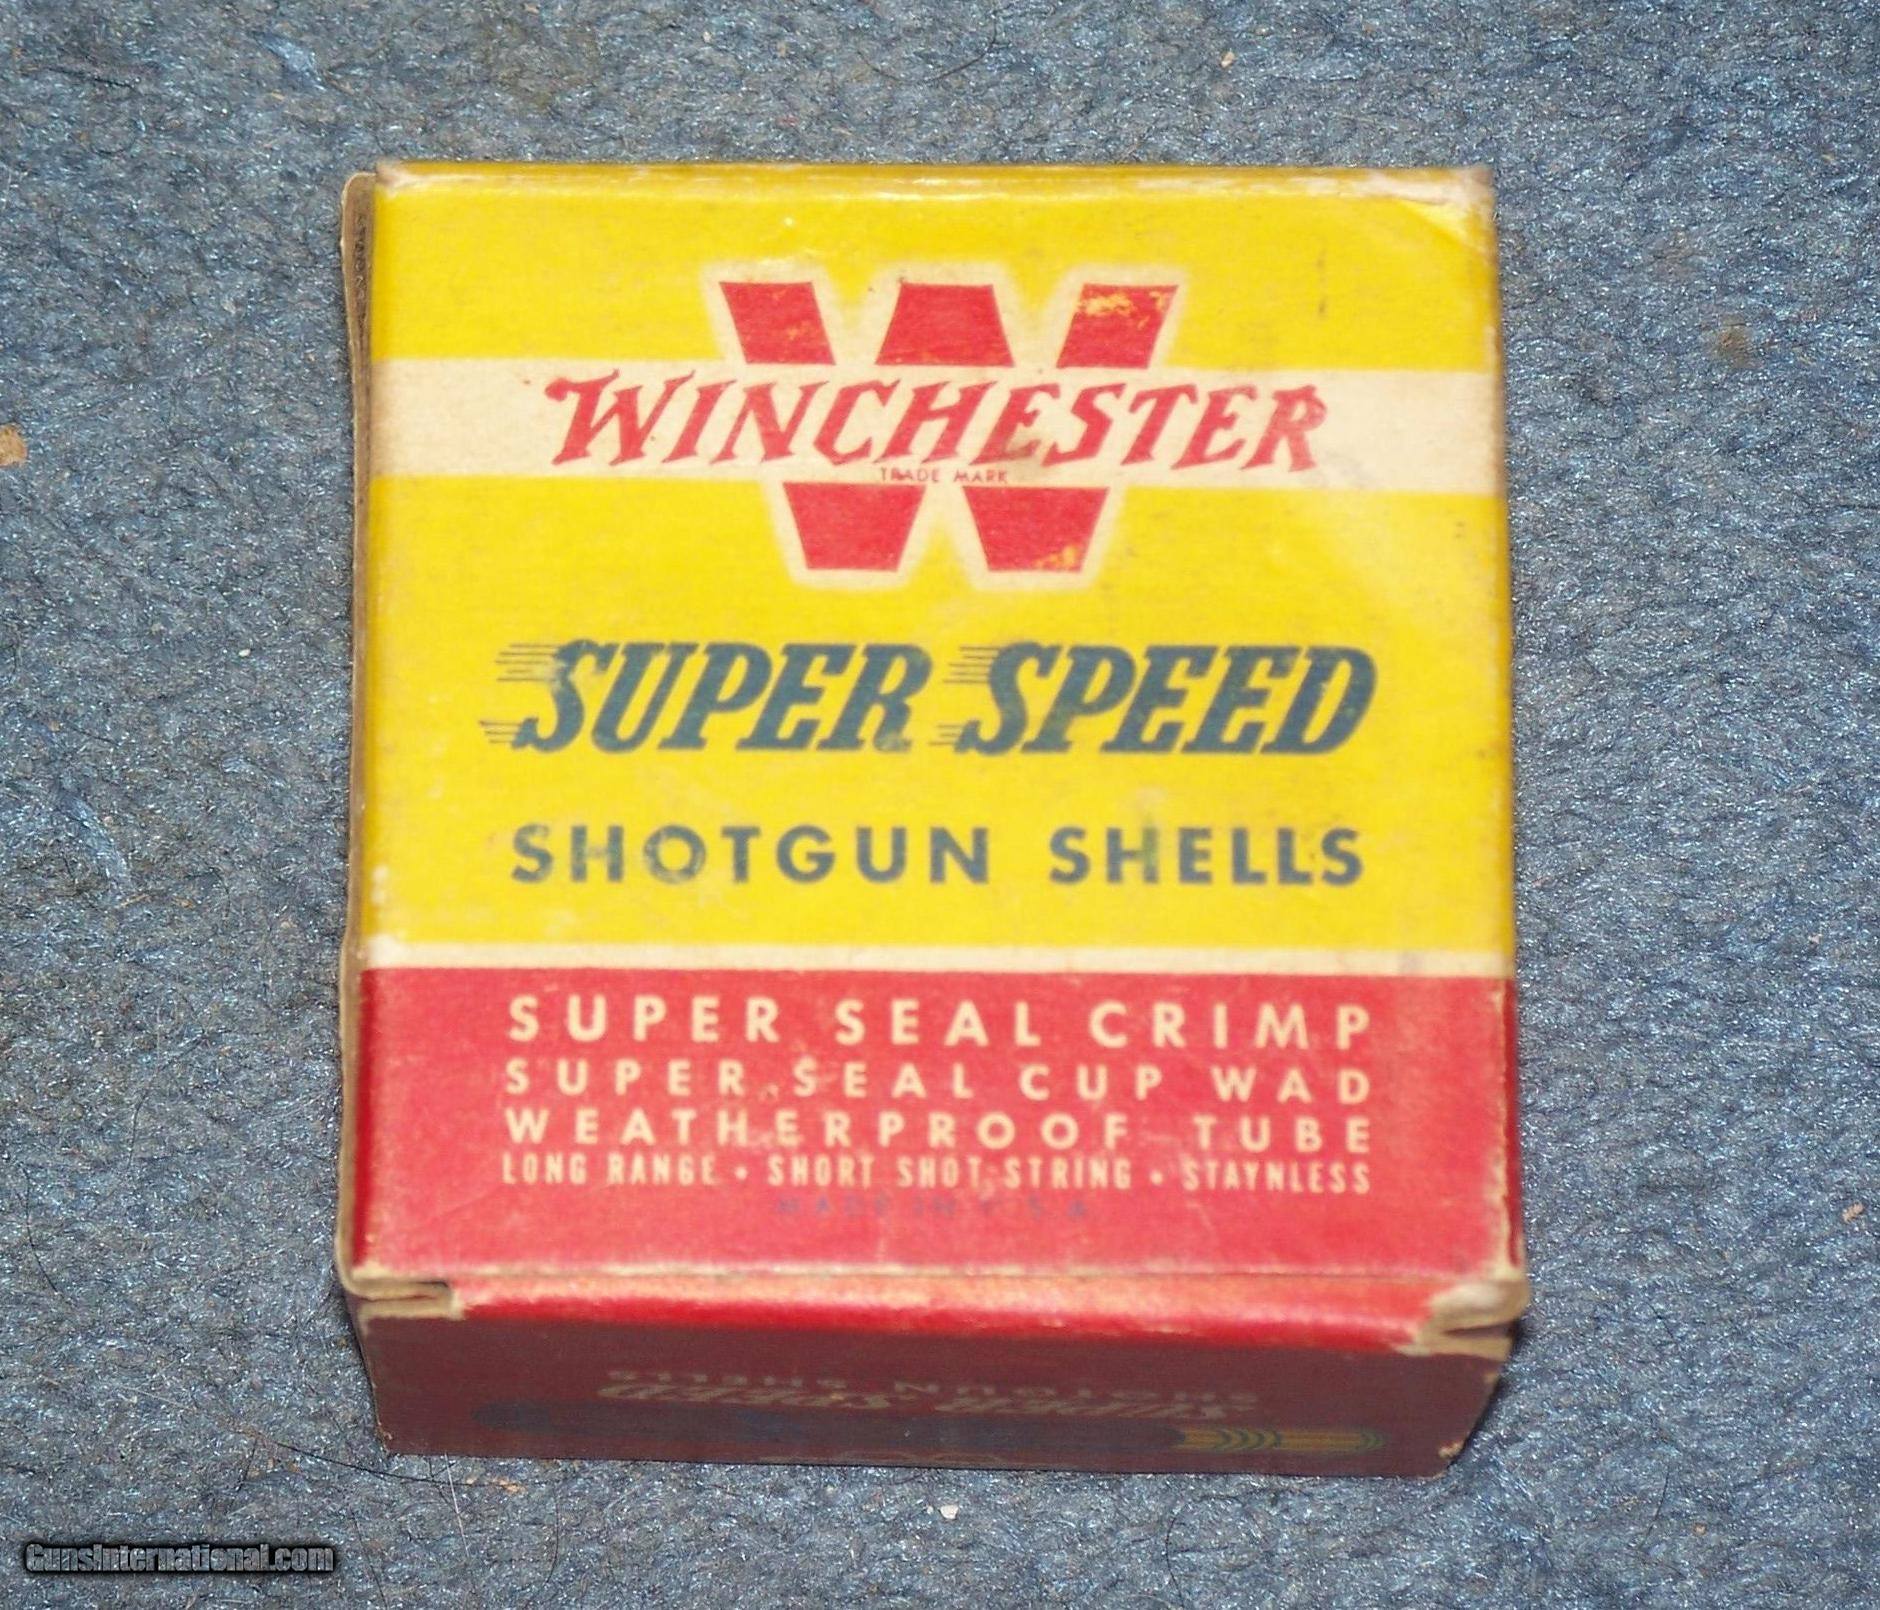 WINCHESTER Super Speed 28 gauge, full box paper shells